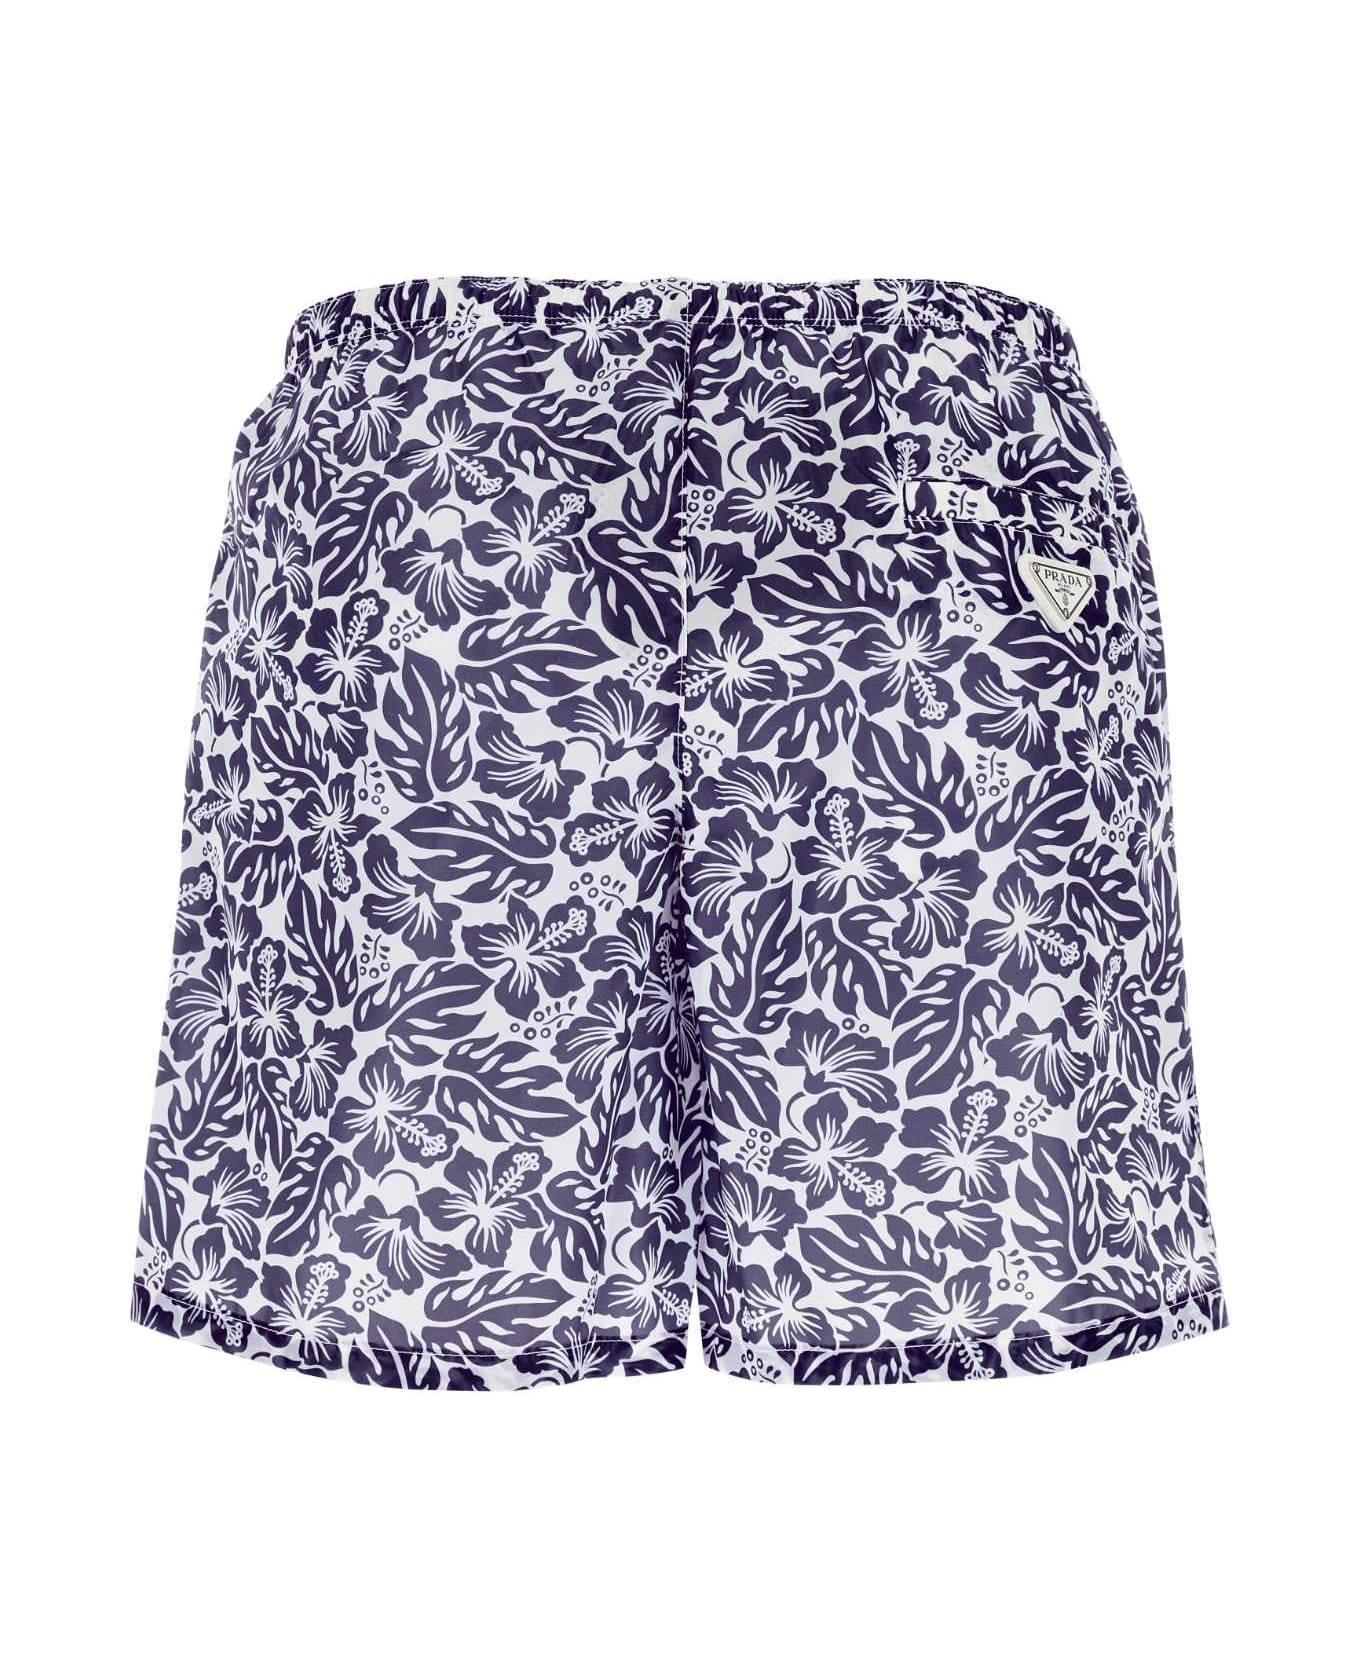 Prada Printed Nylon Swimming Shorts - BLEU